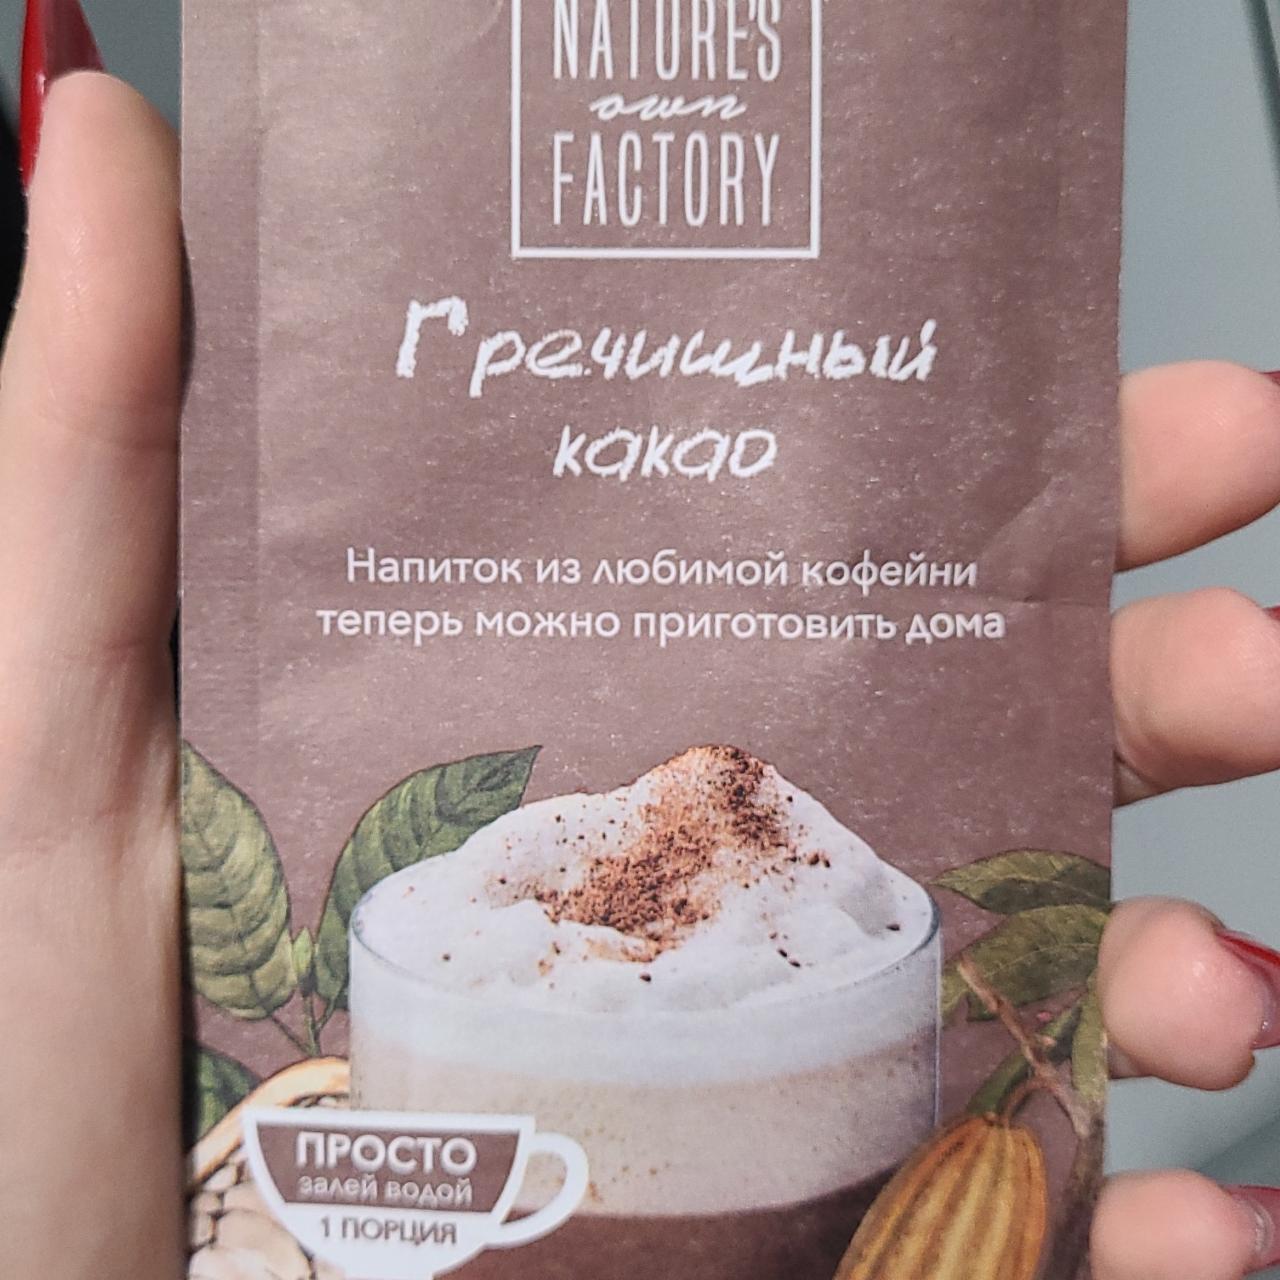 Фото - гречишный какао Nature's own Factory